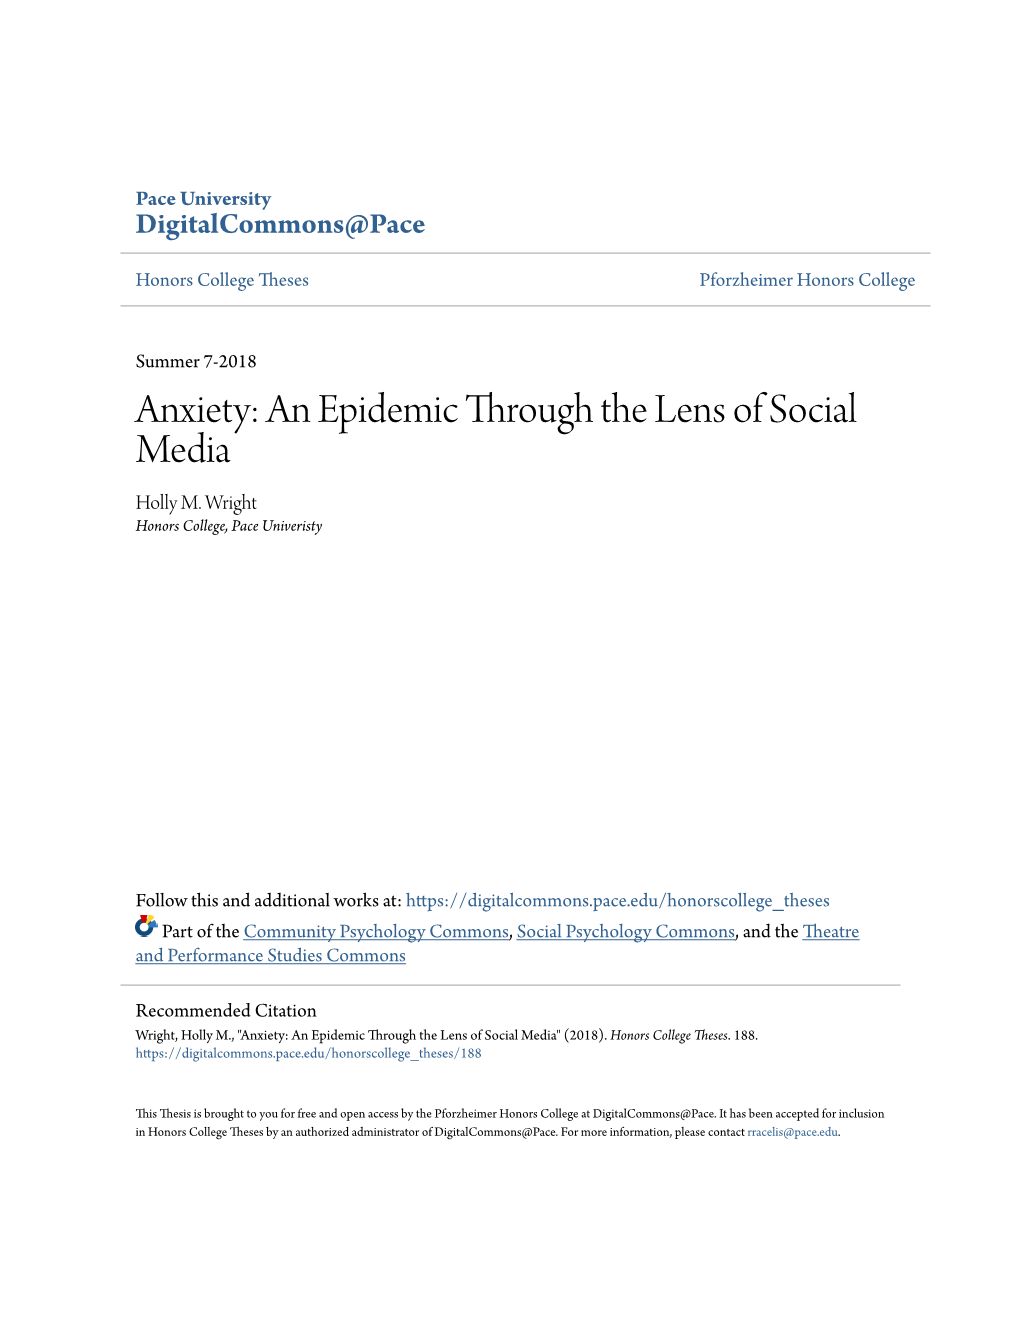 Anxiety: an Epidemic Through the Lens of Social Media Holly M